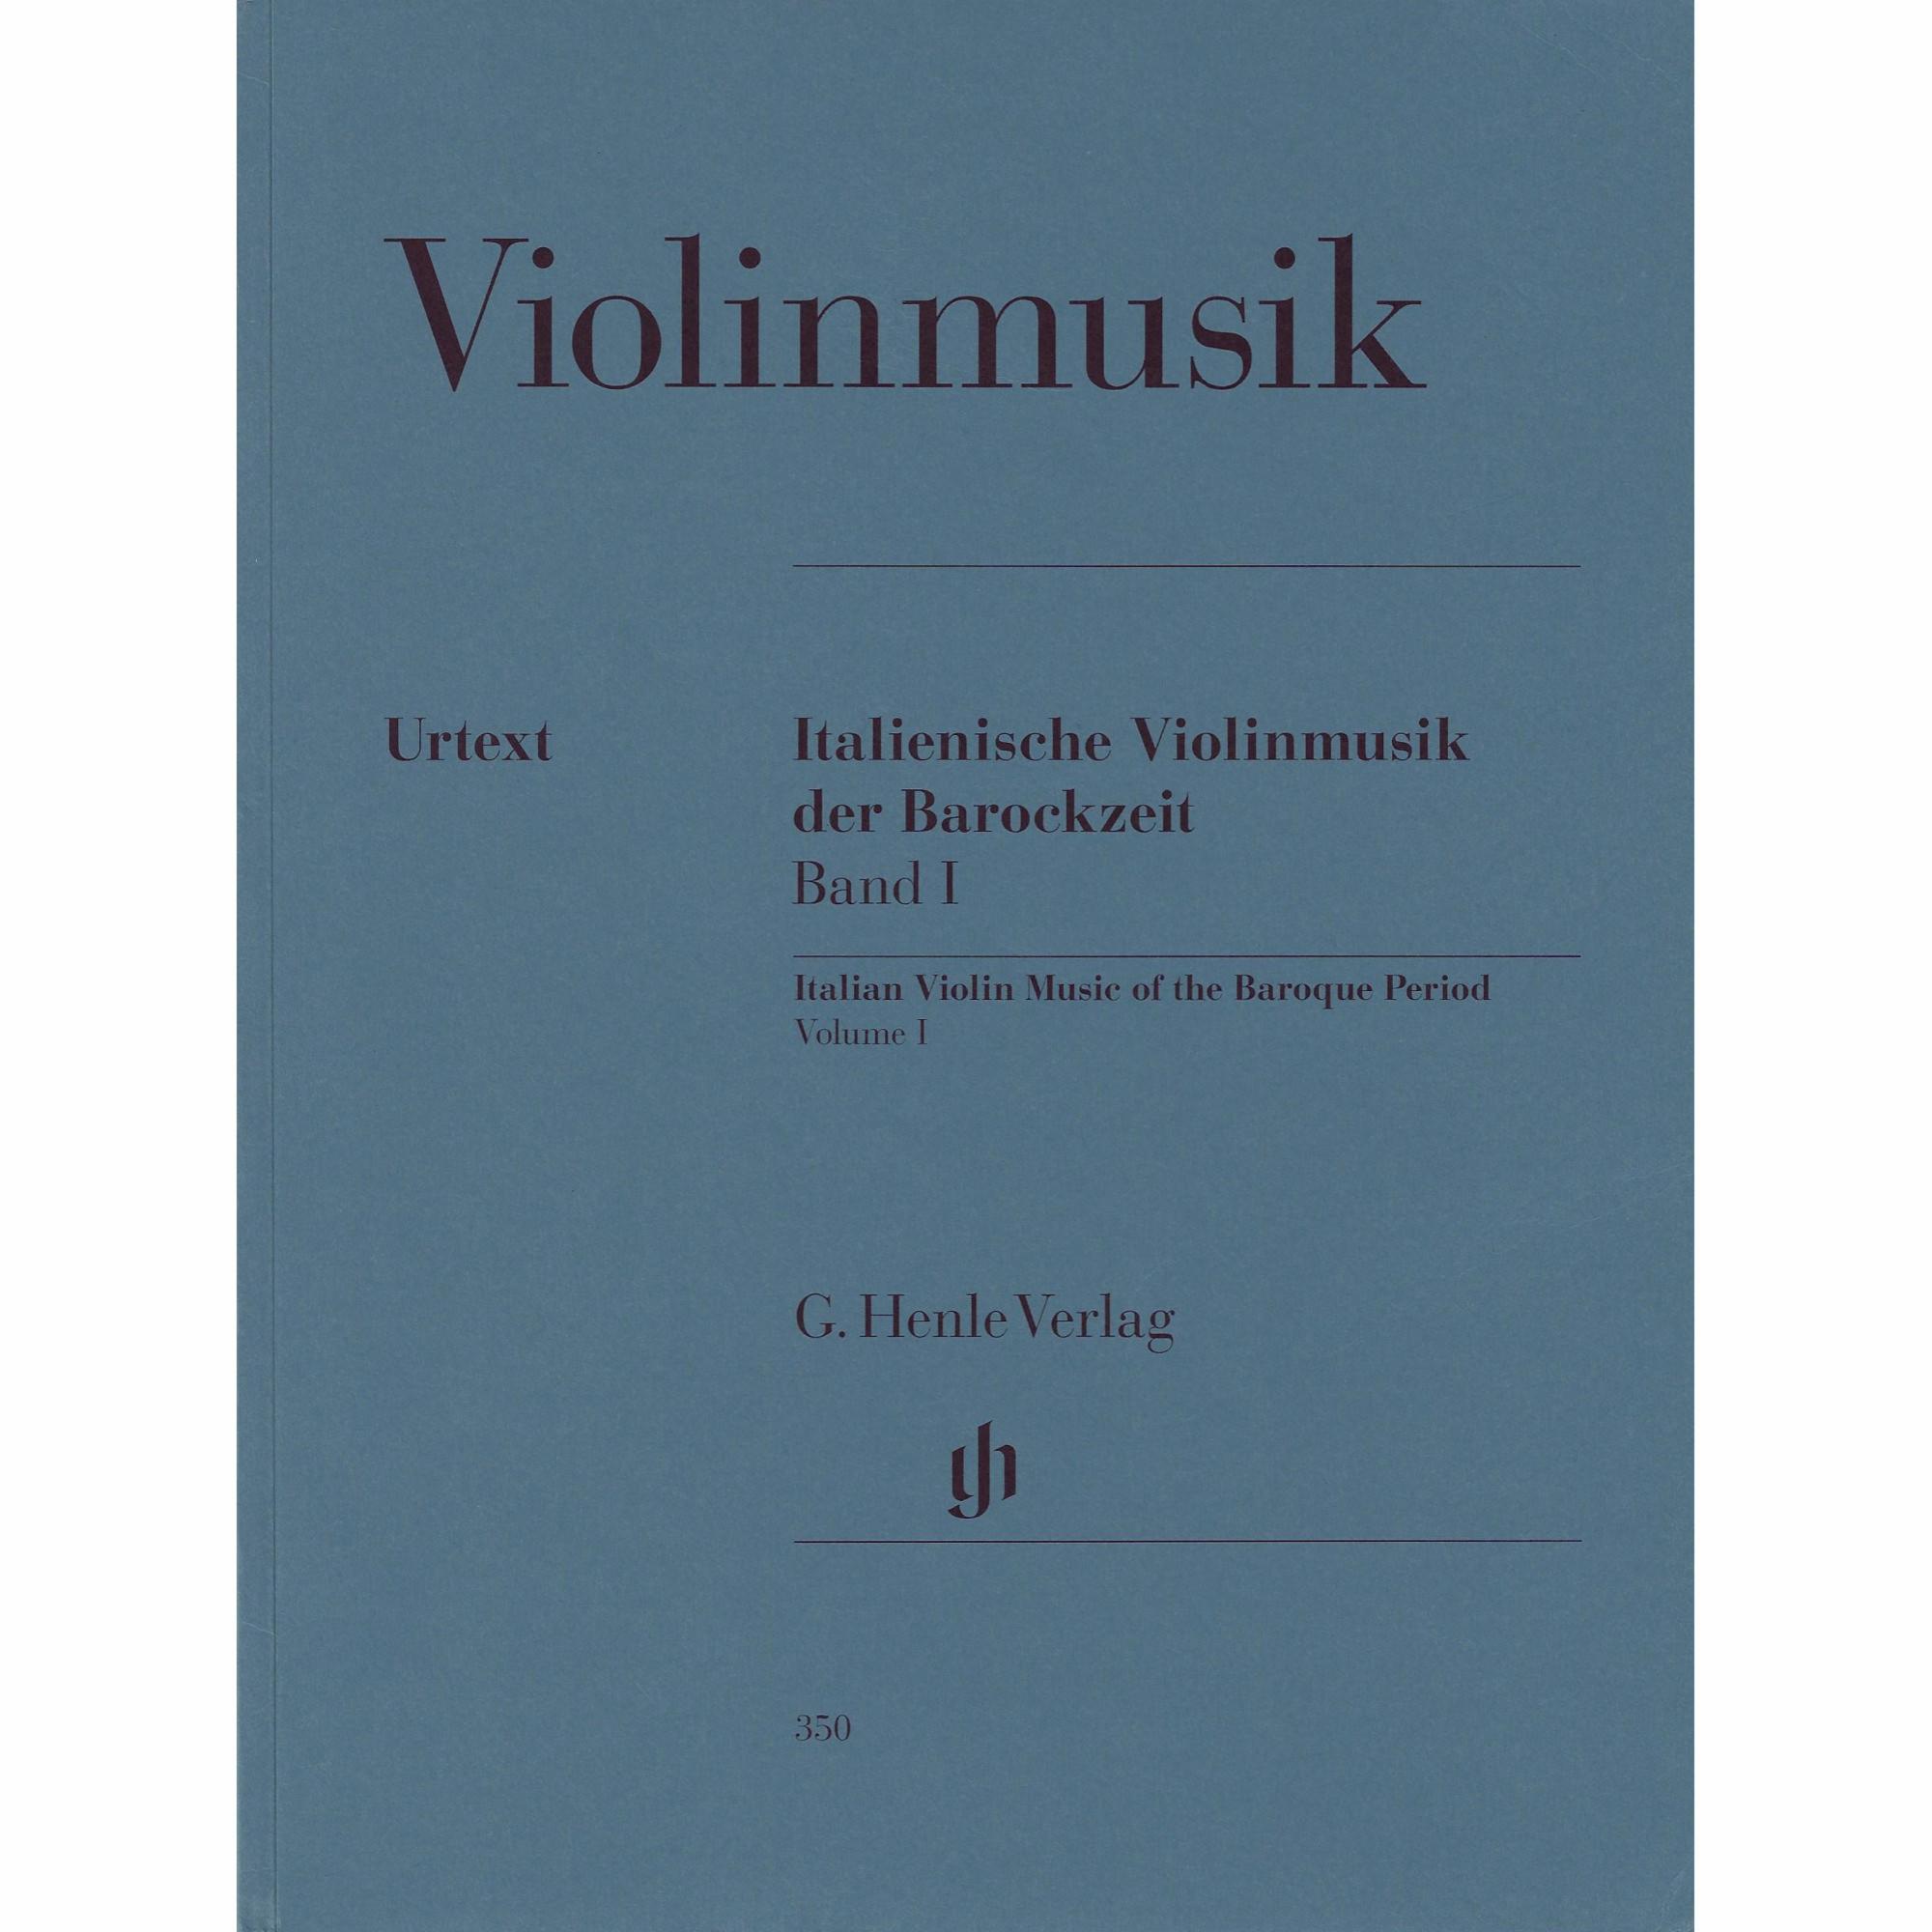 Italian Violin Music of the Baroque Period, Volumes I & II